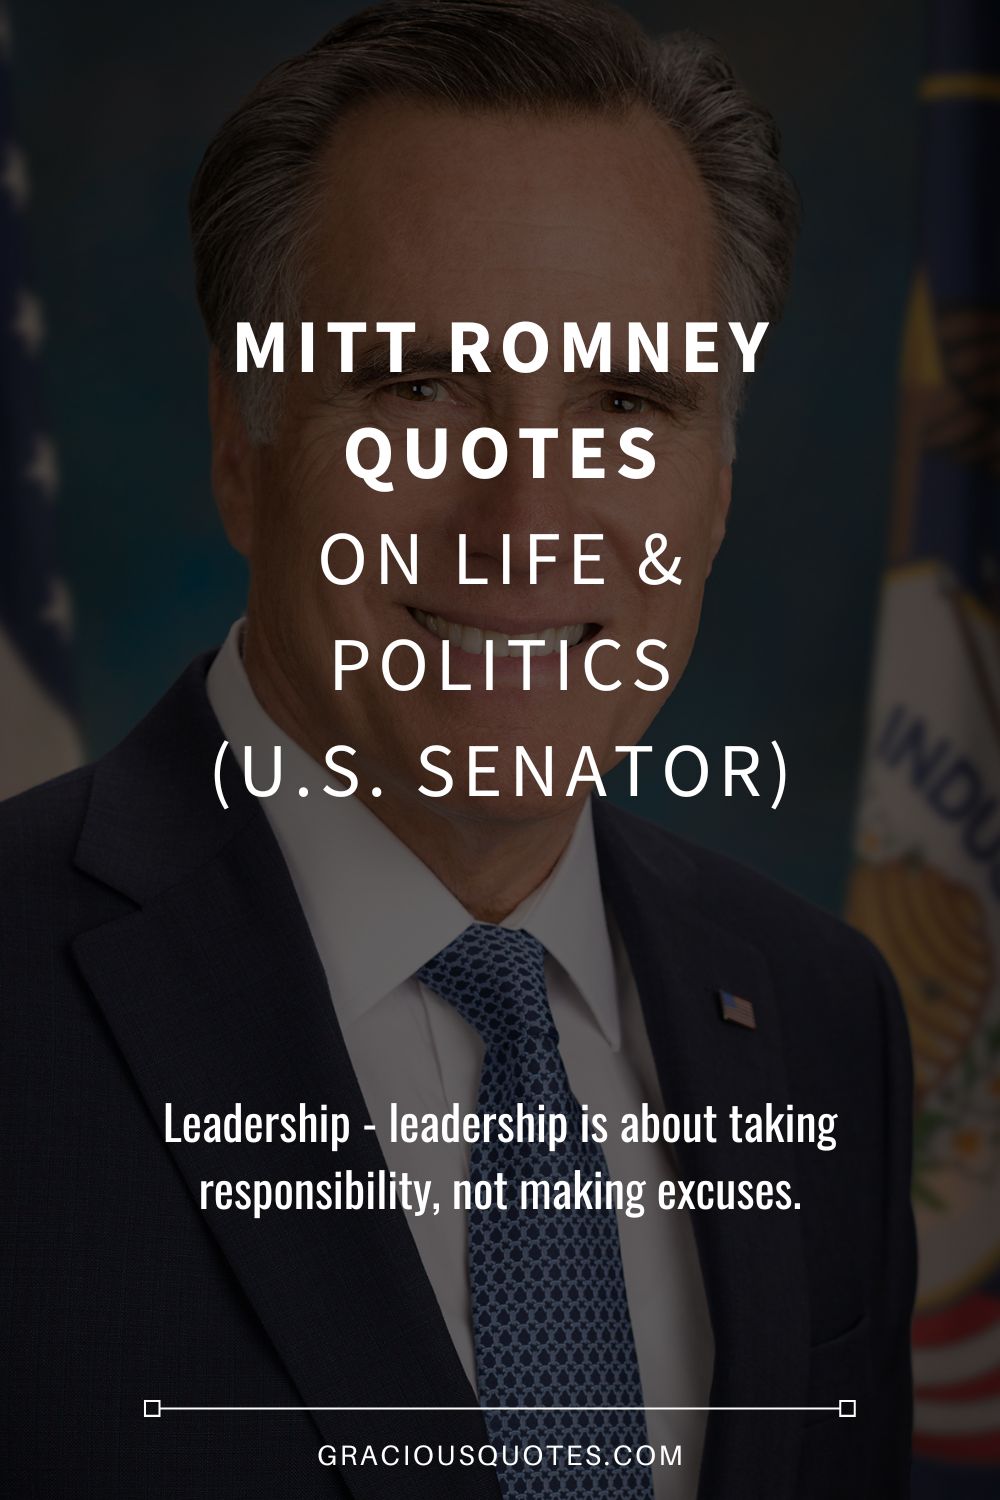 Mitt Romney Quotes on Life & Politics (U.S. Senator) - Gracious Quotes